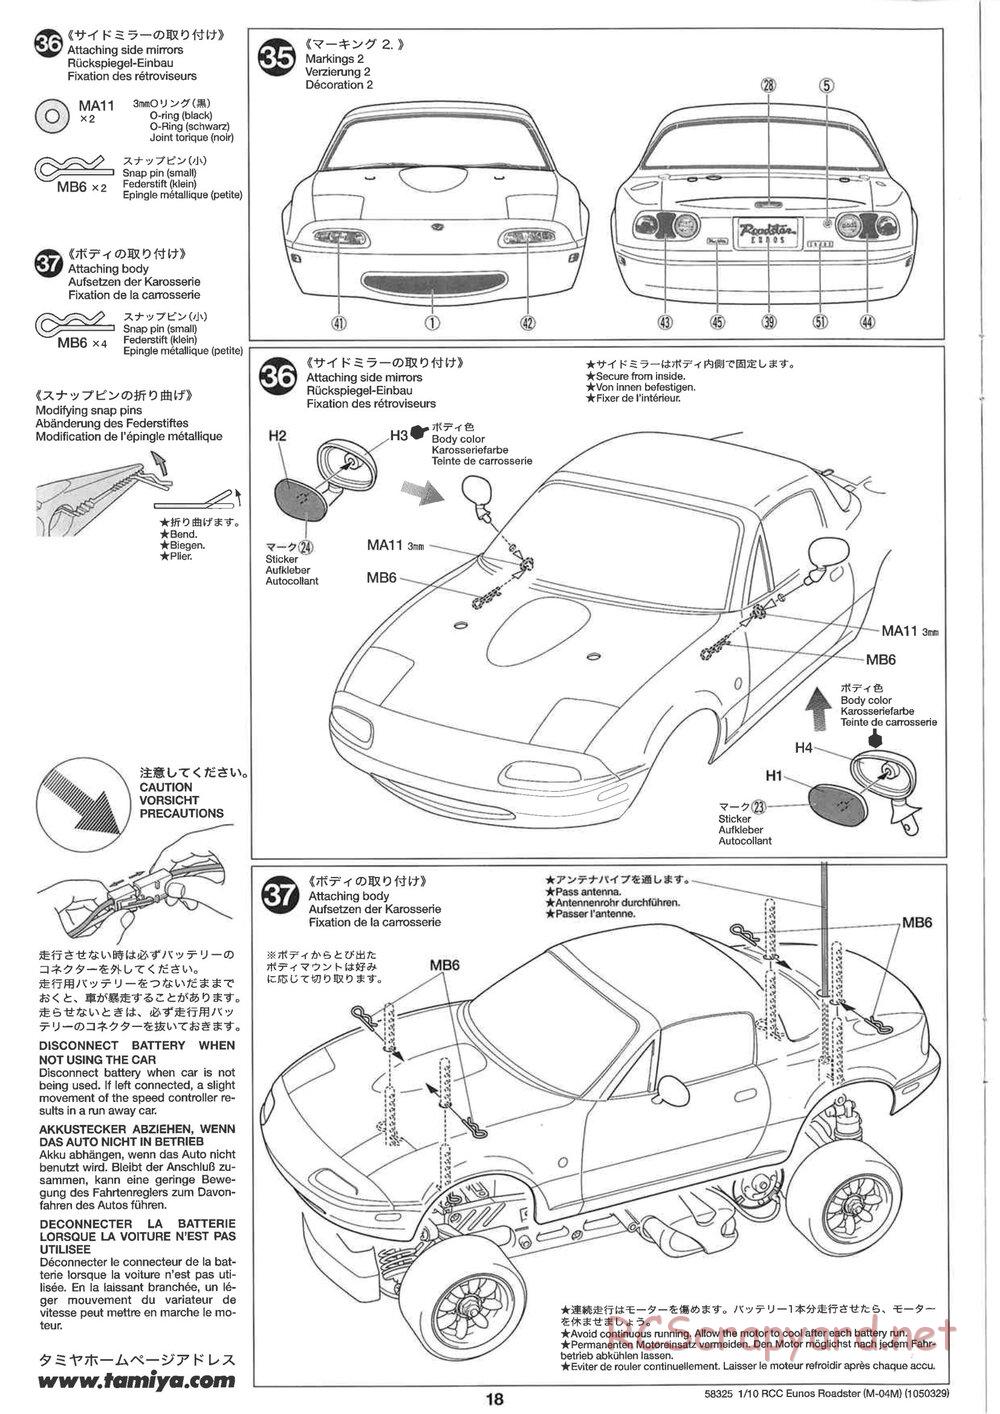 Tamiya - Eunos Roadster - M04M Chassis - Manual - Page 18